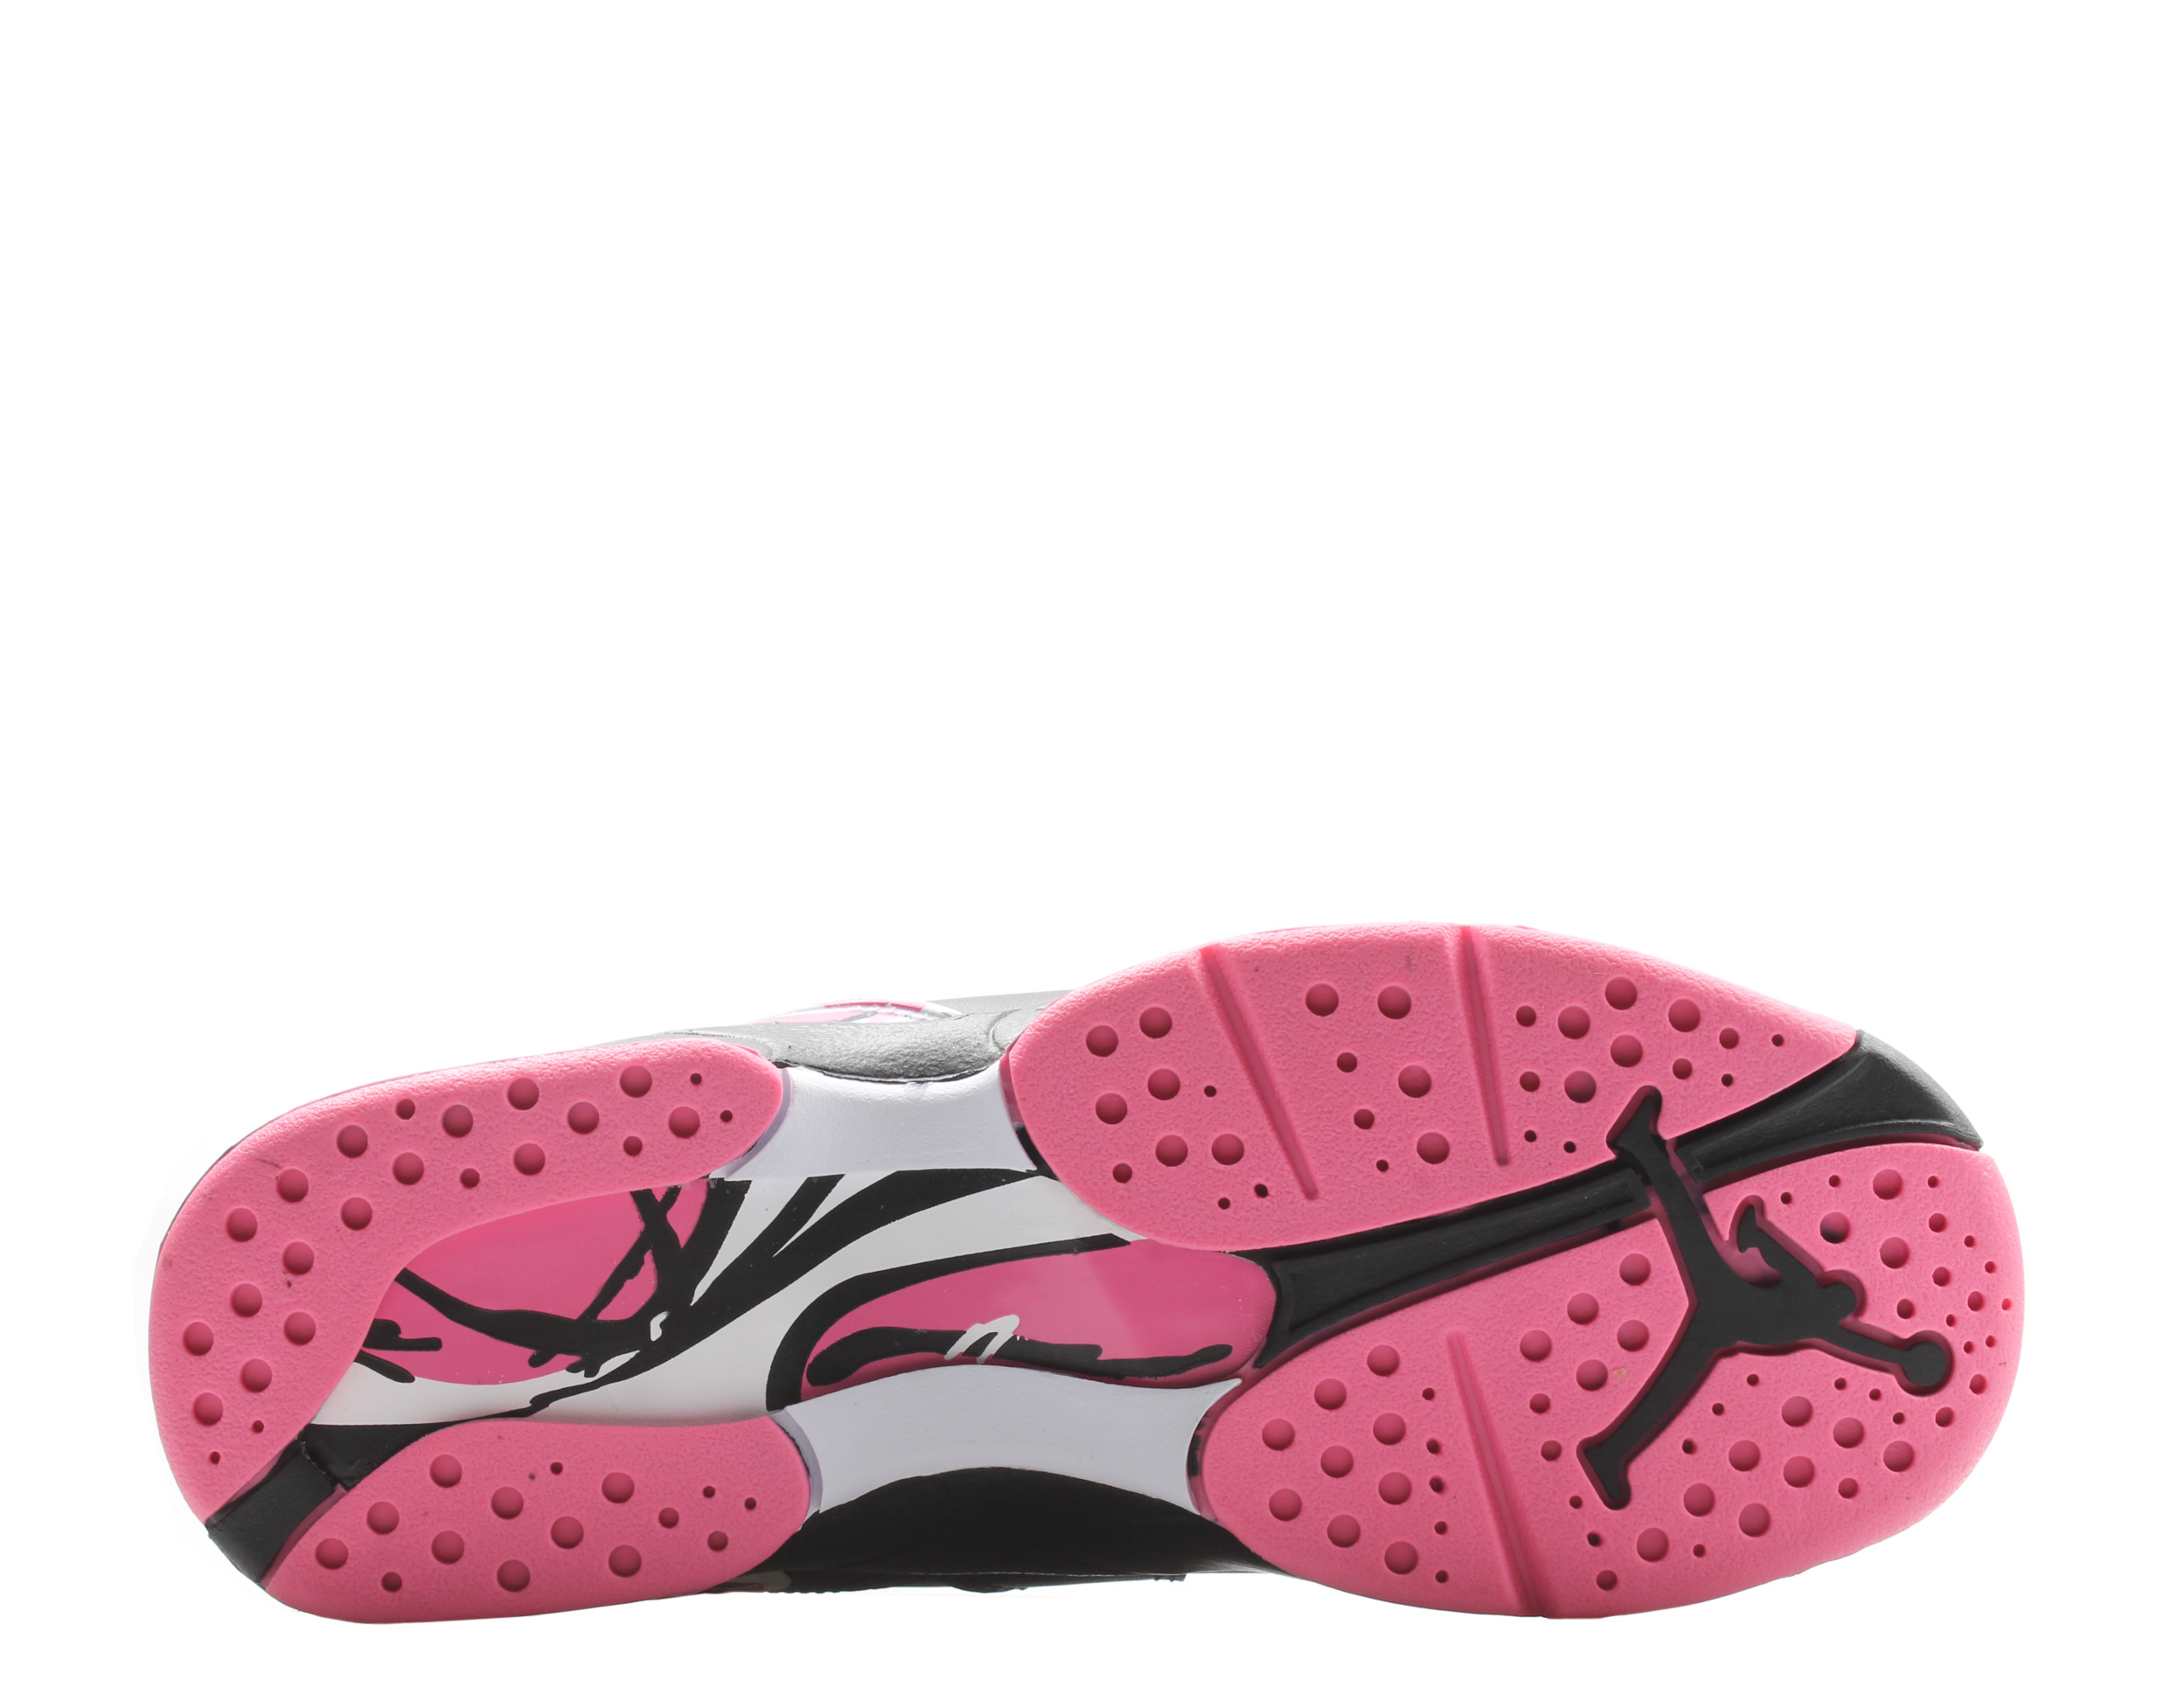 Nike Air Jordan 8 Retro (GS) Big Girls Basketball Shoes Size 6 - image 5 of 6